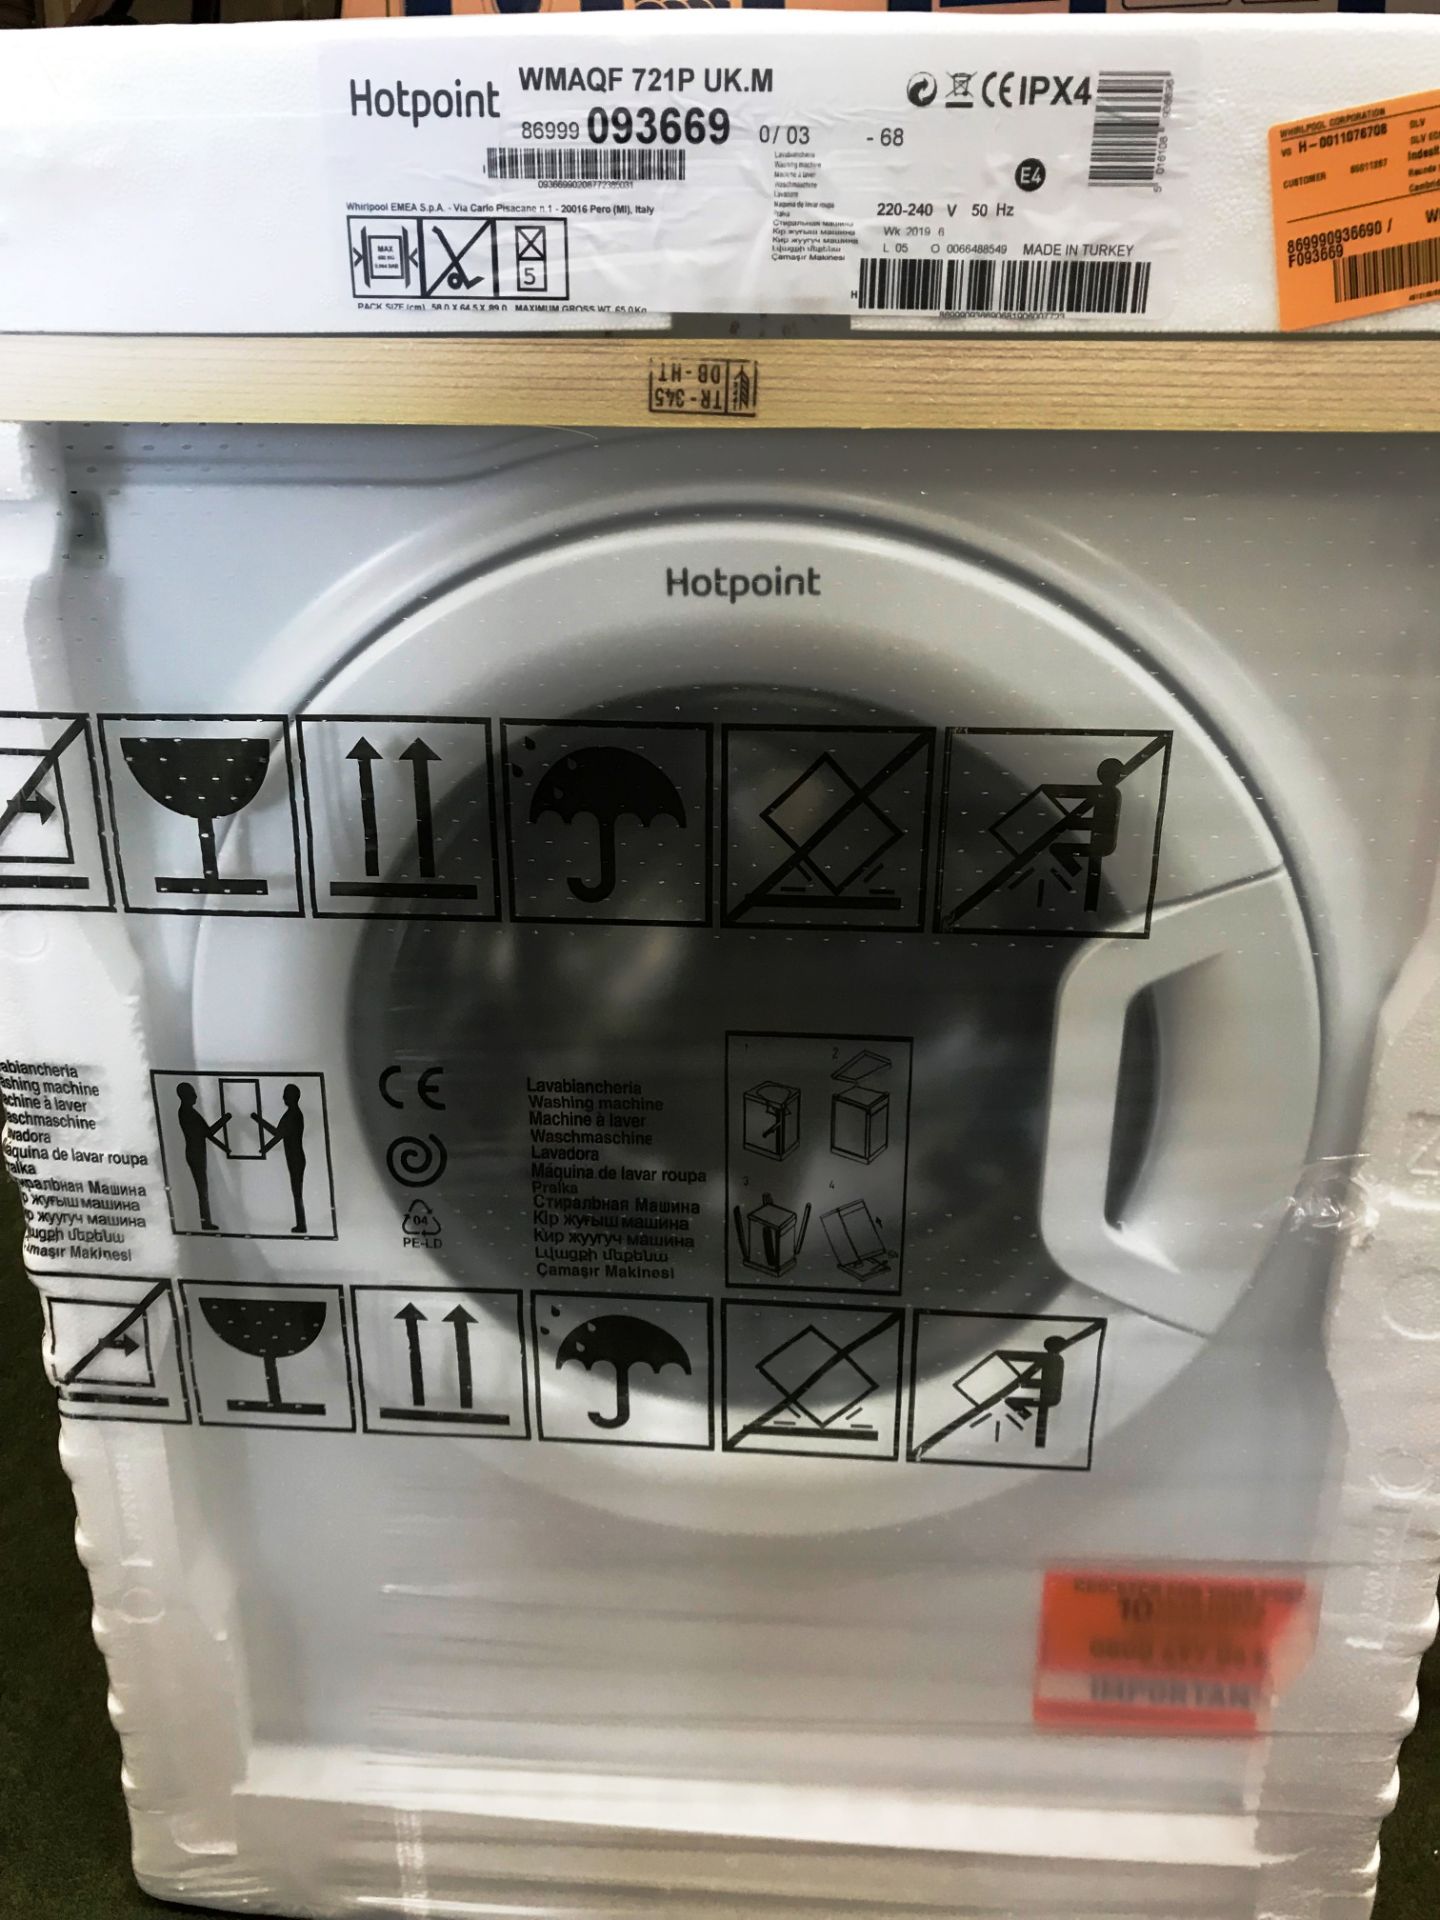 New Hotpoint WMAQF721 Washing Machine - White - RRP£214 - Image 4 of 5